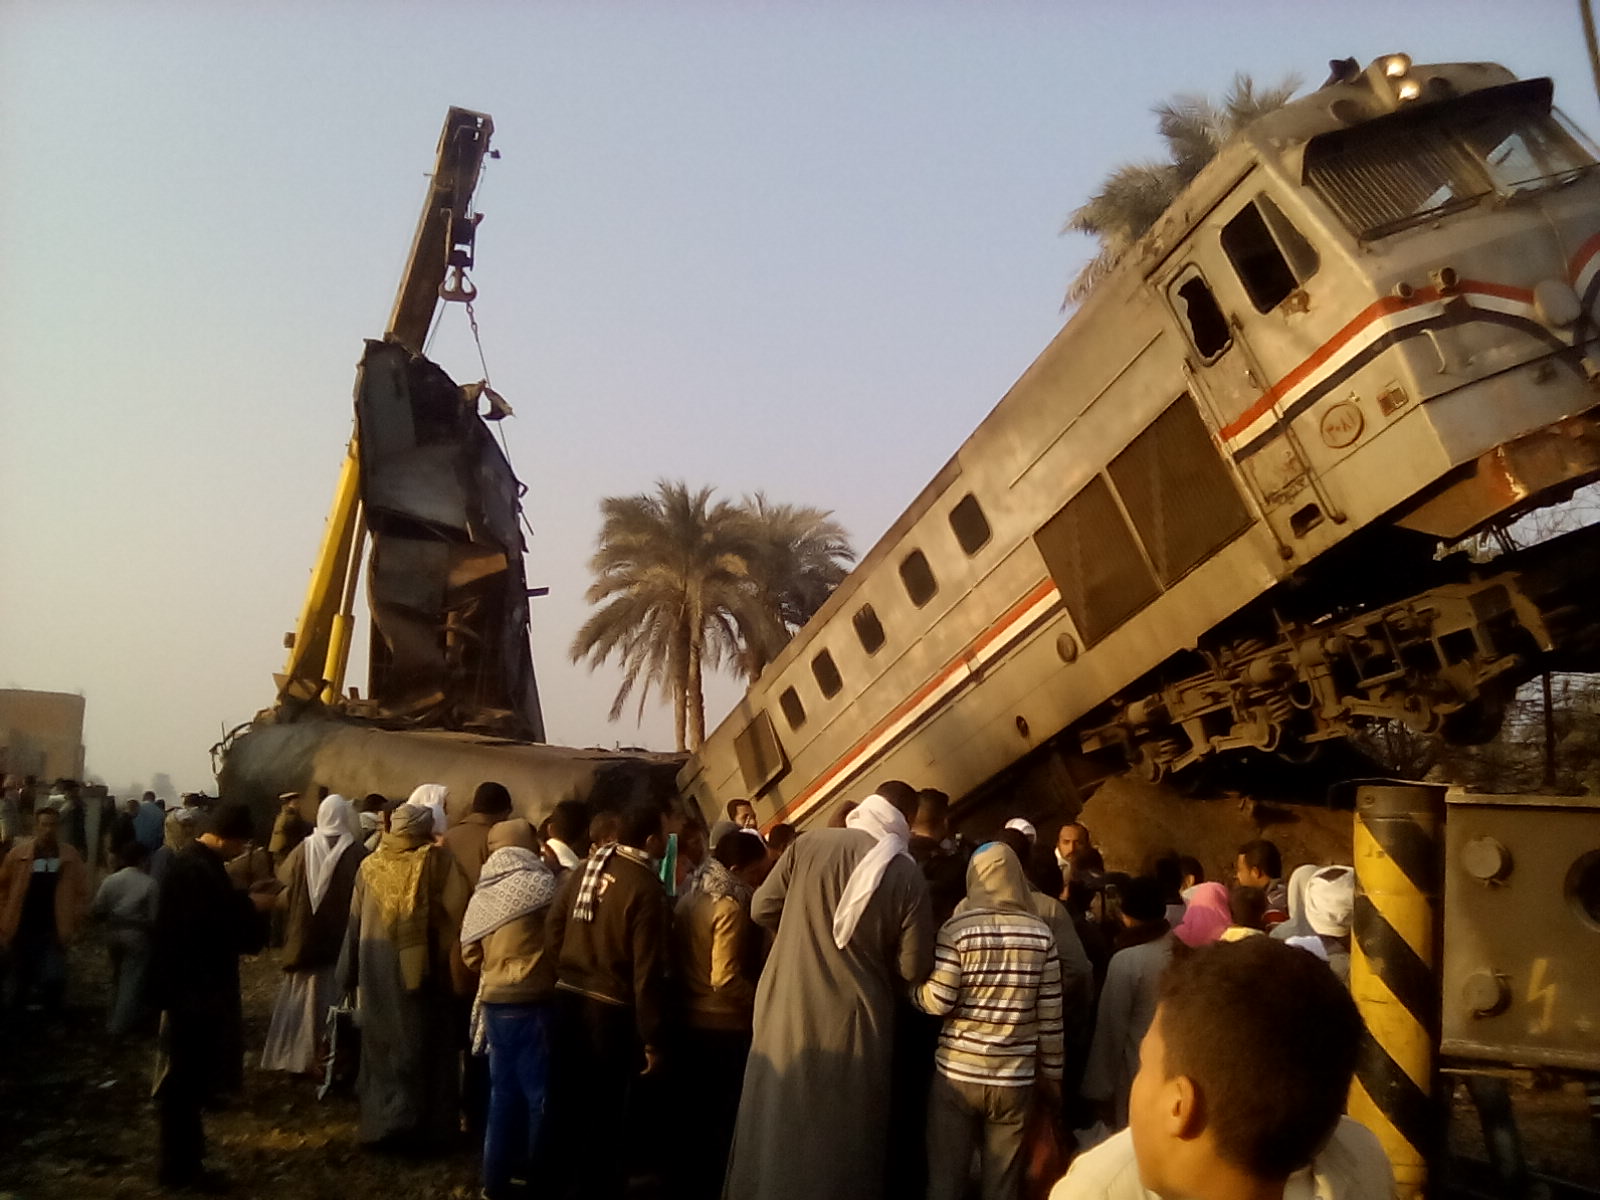 The site of a train crash in Egypt's Beni Suef province, February 11, 2016 (Photo: Aswat Masriya)